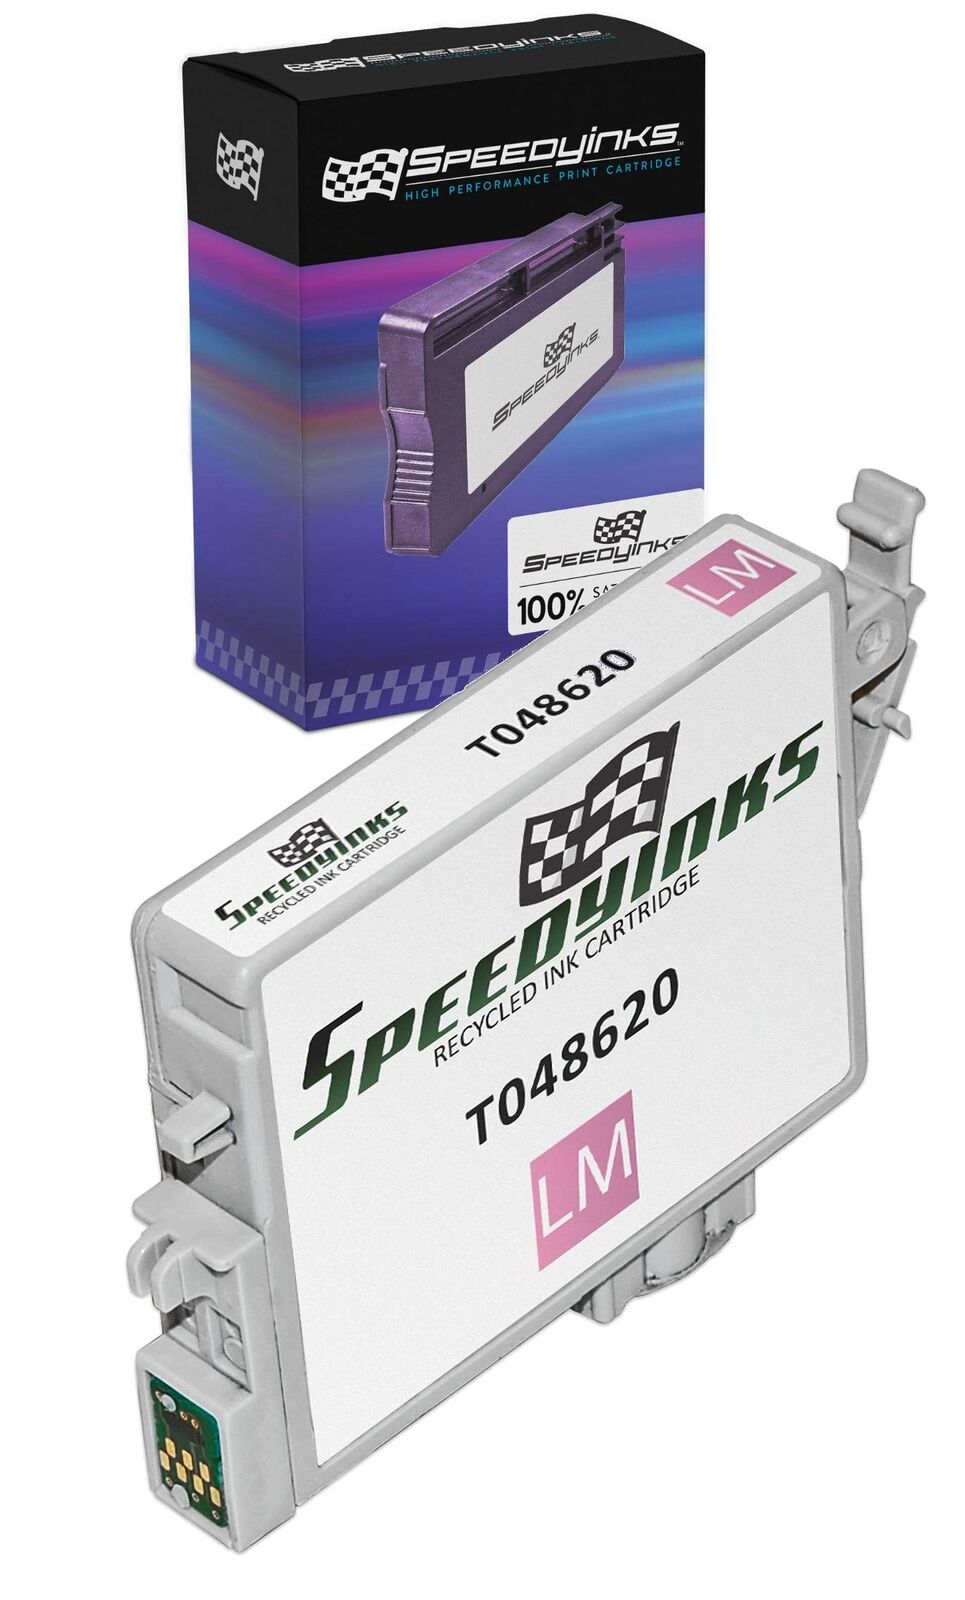 Reman T048620 for Epson T048 LIGHT MAGENTA Ink Cartridge R340 R320 R300